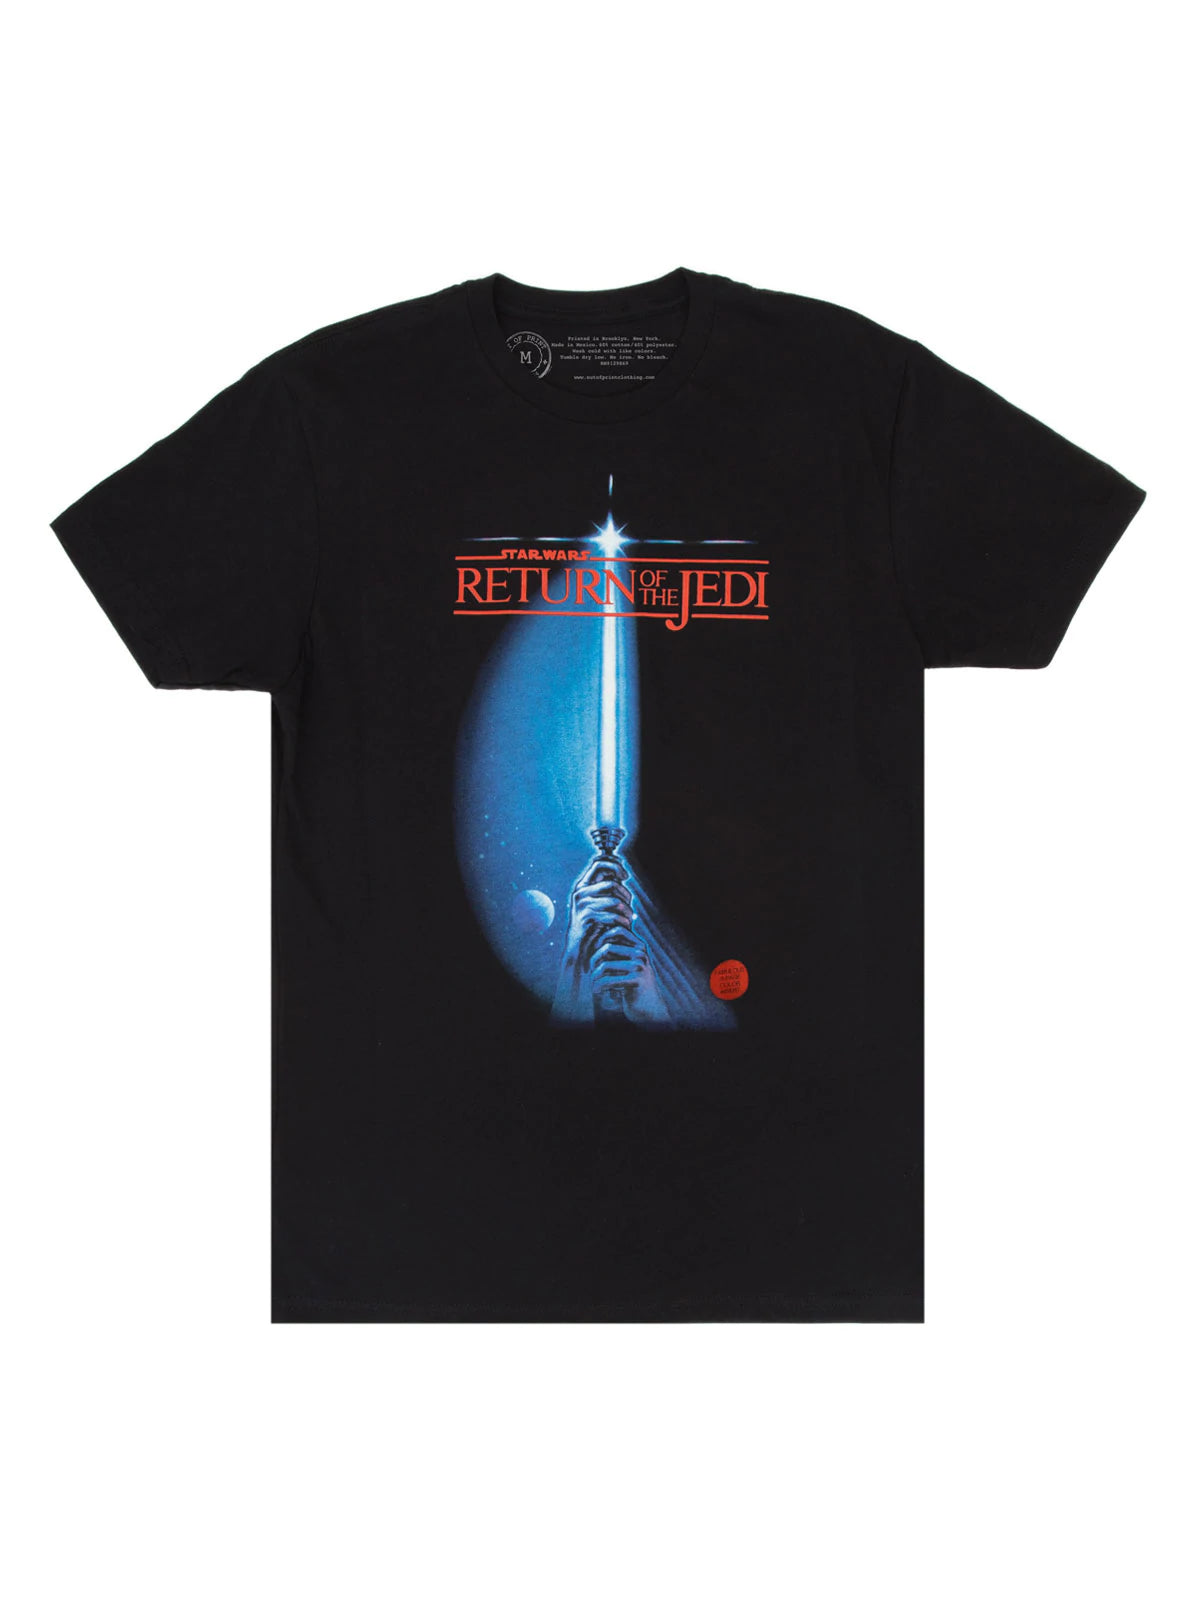 Star Wars: Return of the Jedi Unisex T-Shirt